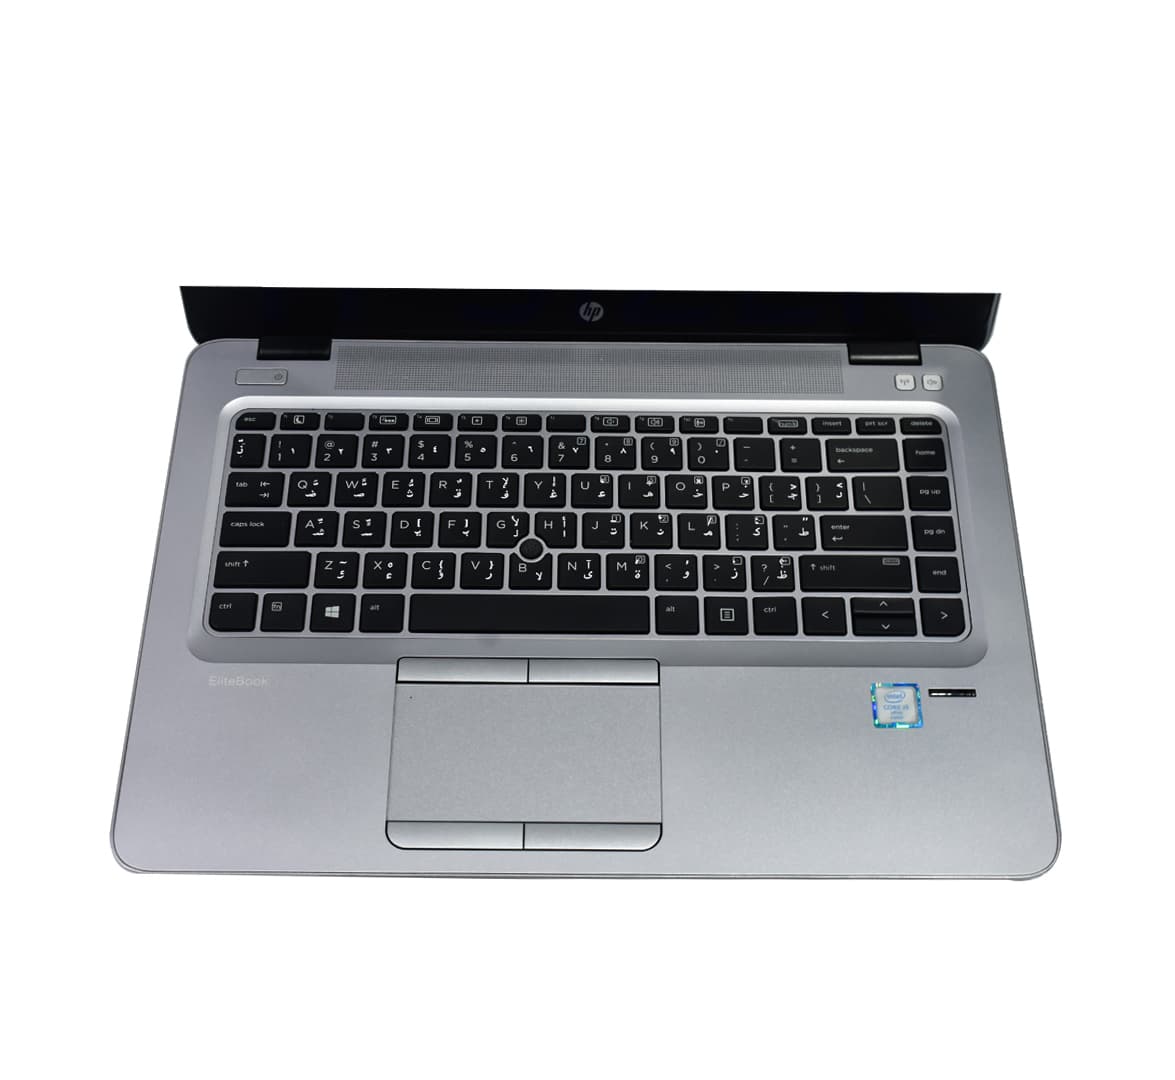 HP EliteBook 840 G3 Business Laptop, Intel Core i5-6th Generation CPU, 8GB RAM, 256GB SSD, 14 inch Touchscreen, Windows 10 Pro, Refurbished Laptop